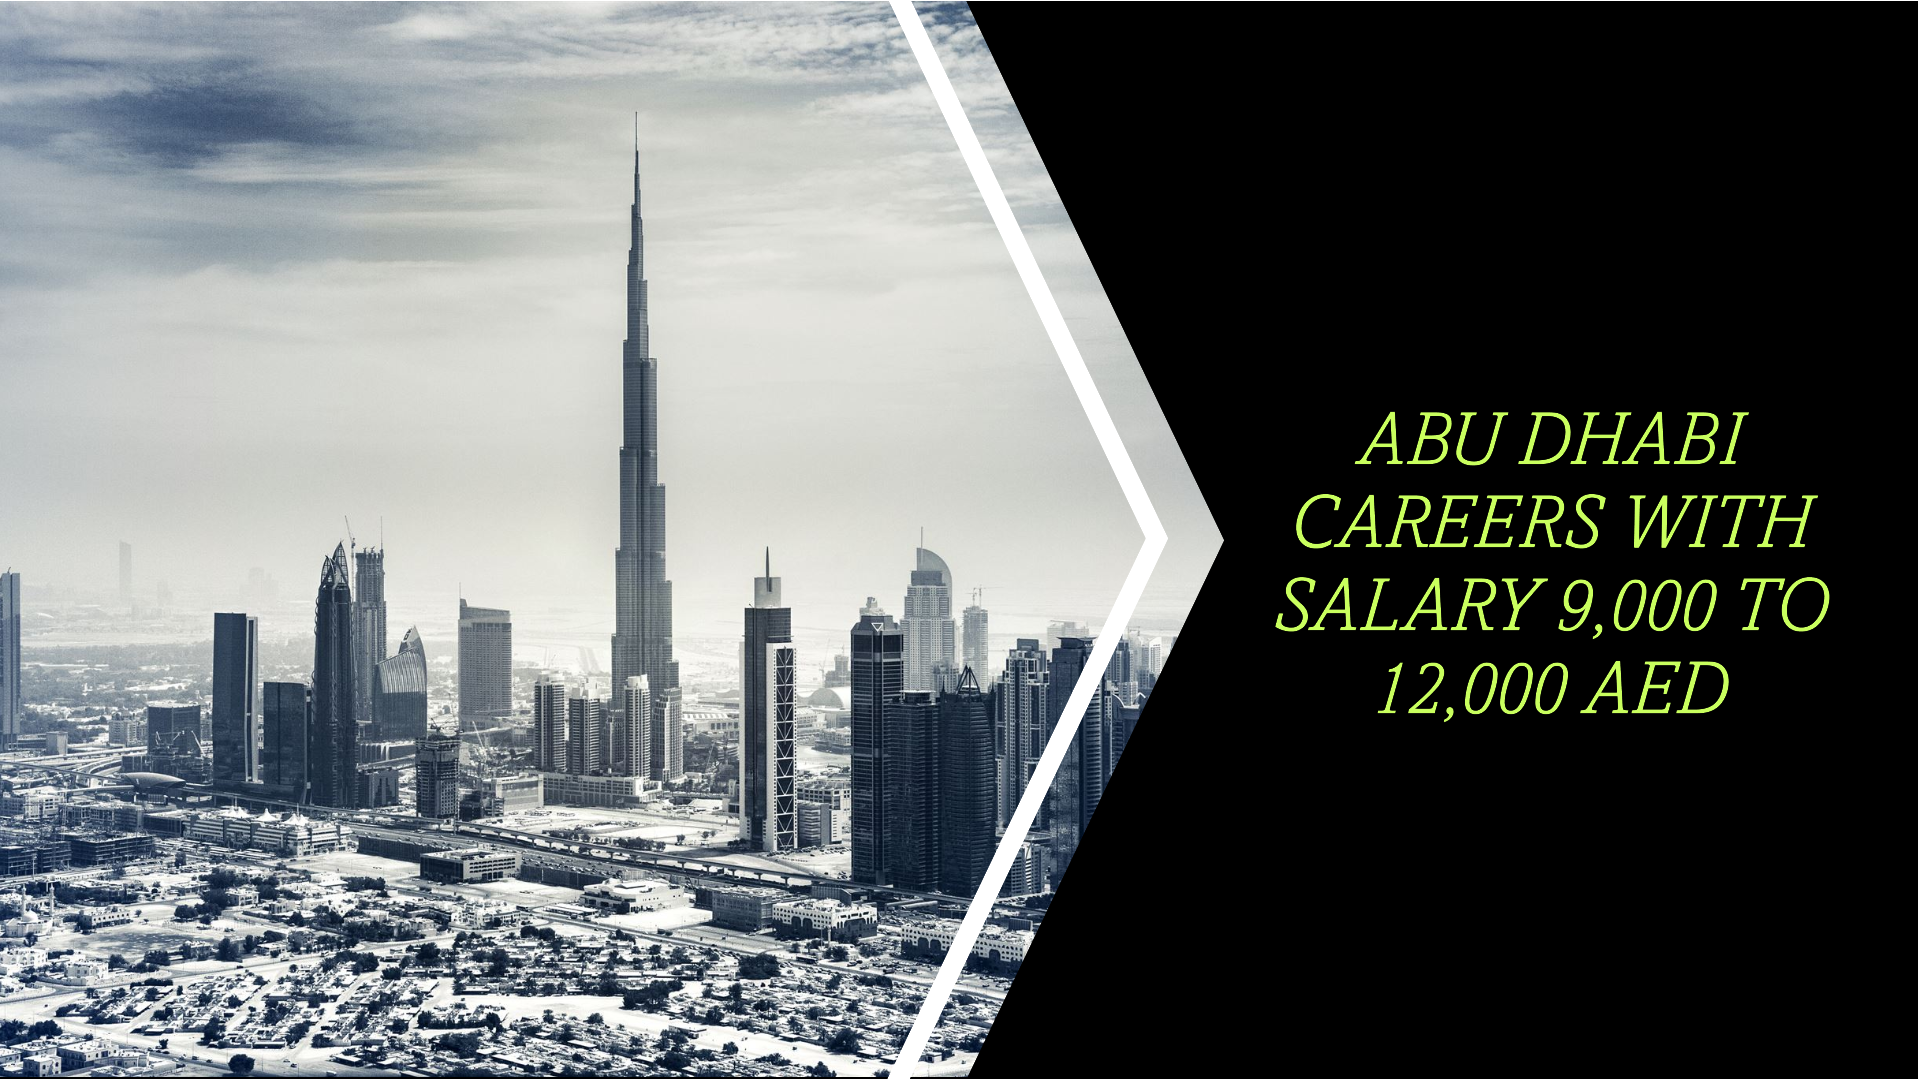 abu dhabi careers with salary 9,000 to 12,000 AED